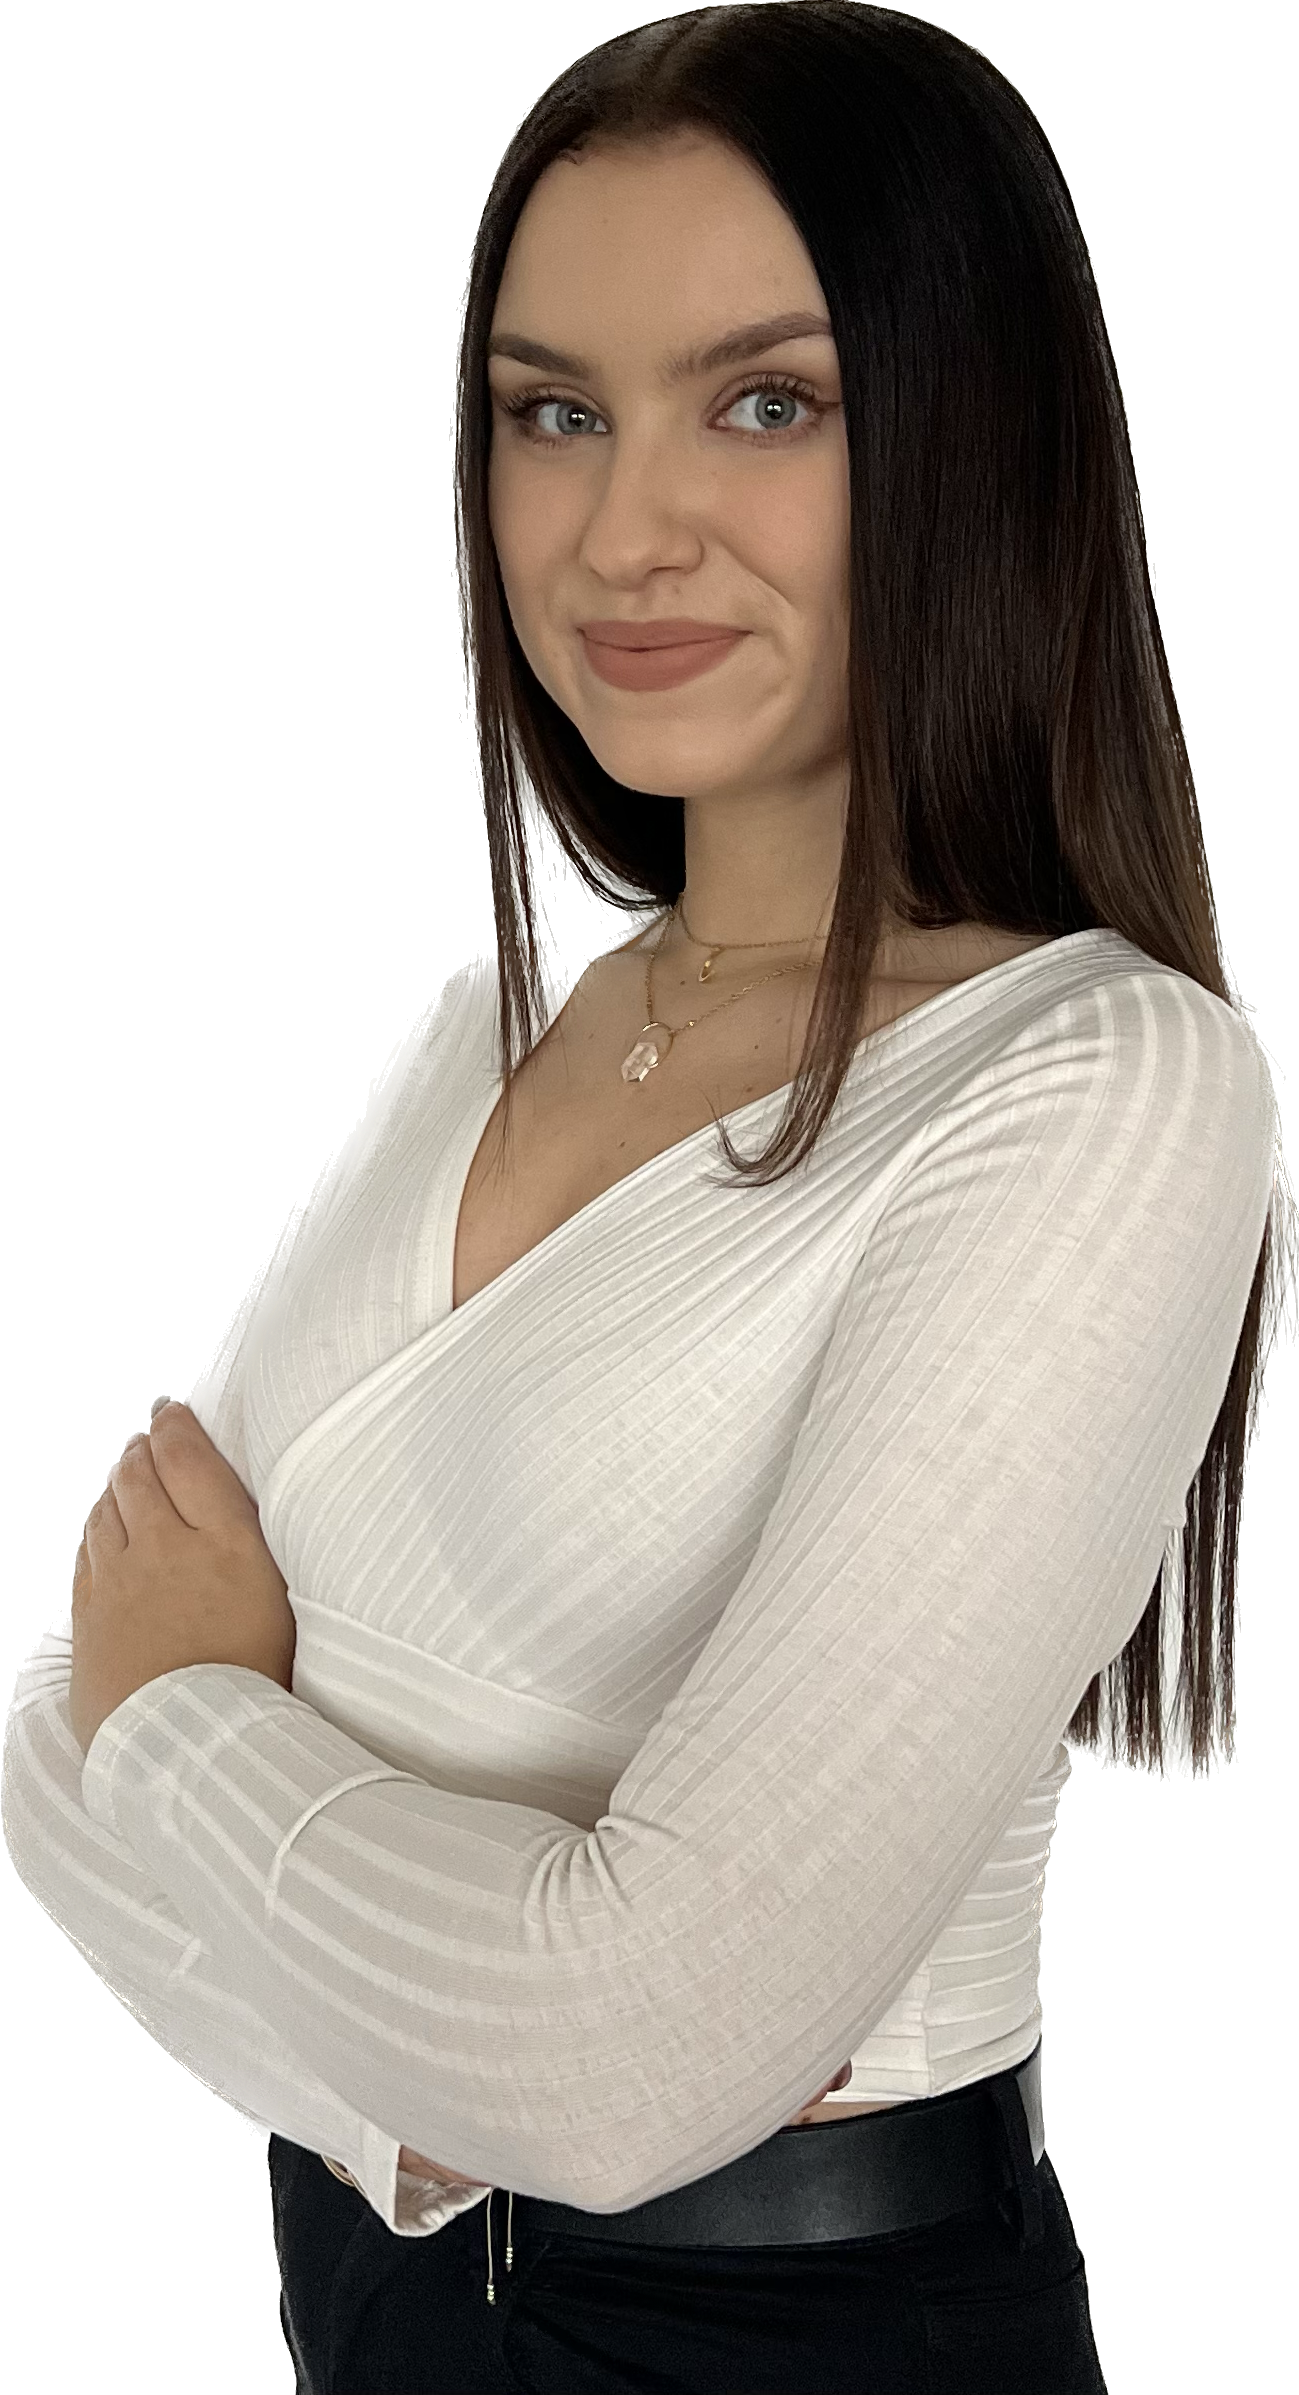 Aleksandra Kajstura-Janiuk zdjęcie profilowe